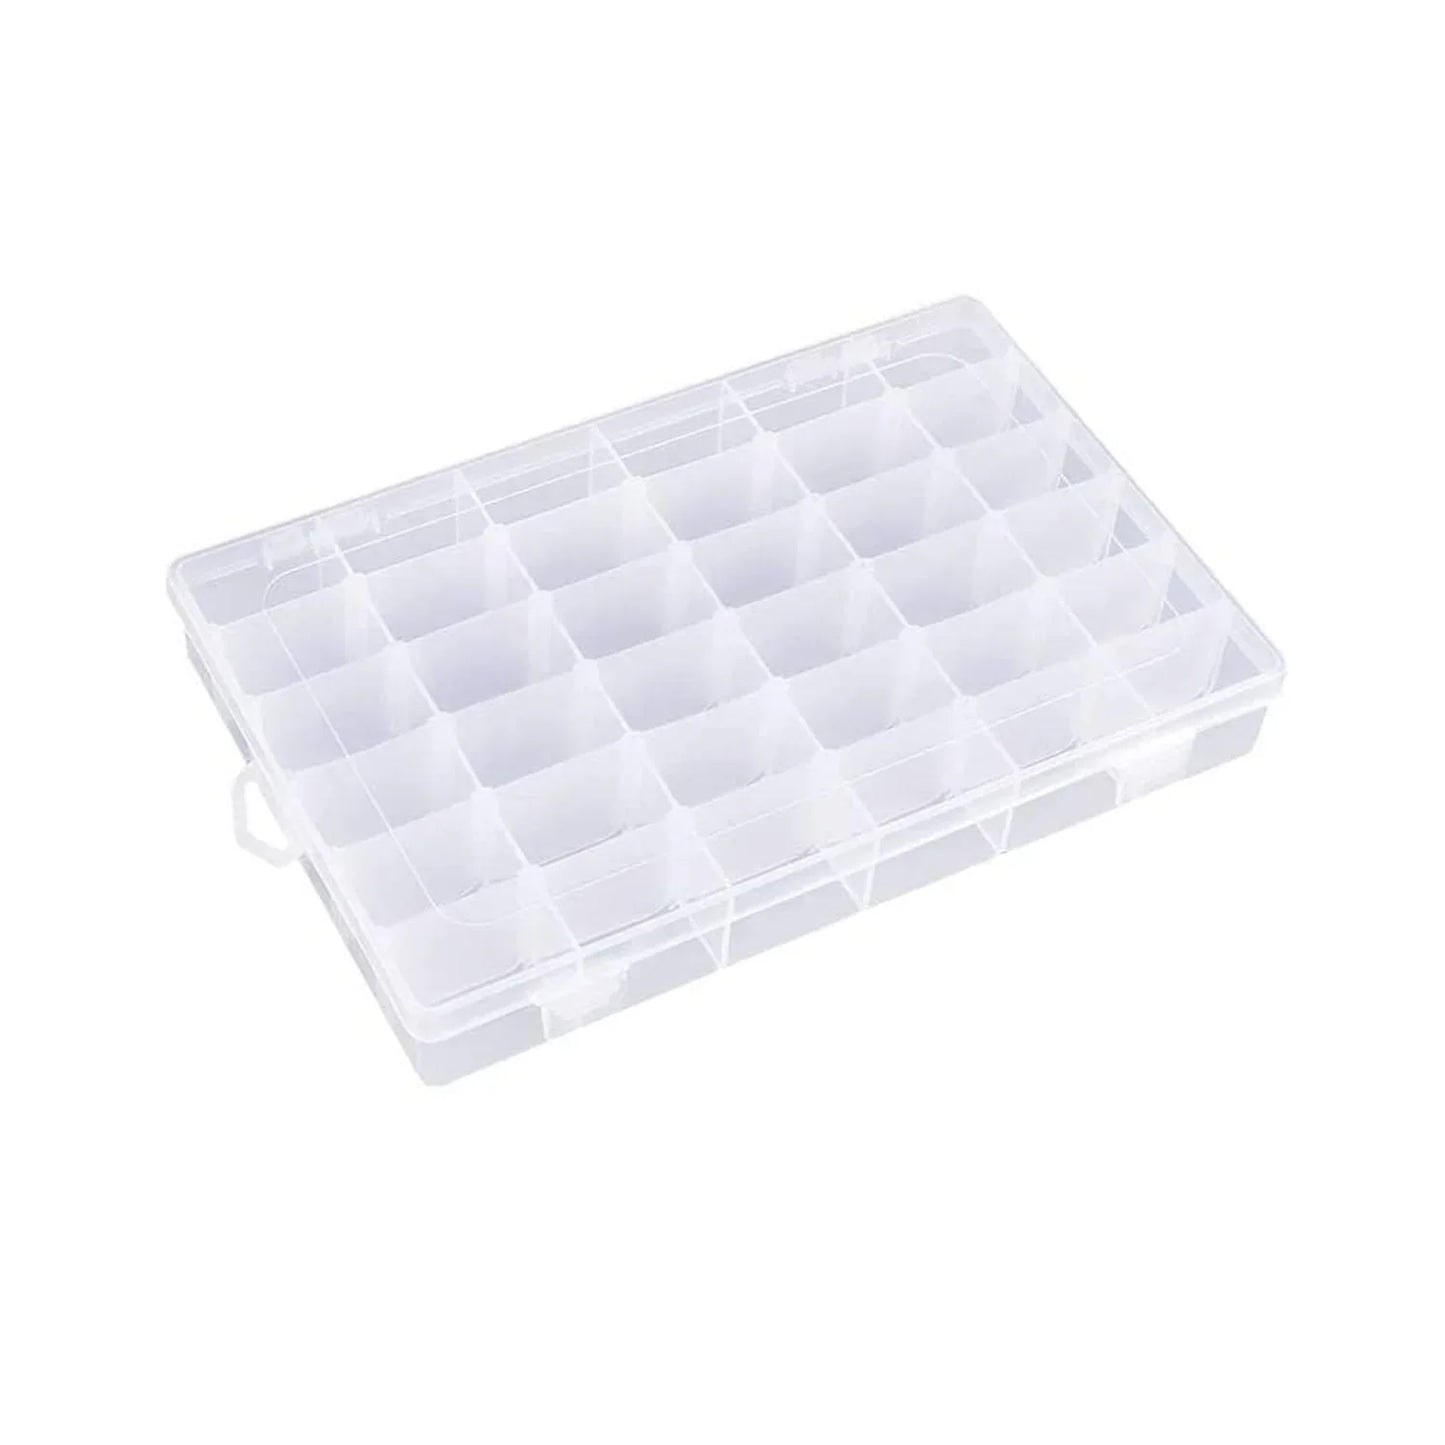 36 Grids Clear Plastic Organizer Jewelry Storage Box with Adjustable Dividers, Transparent Organizer Box (1pc)